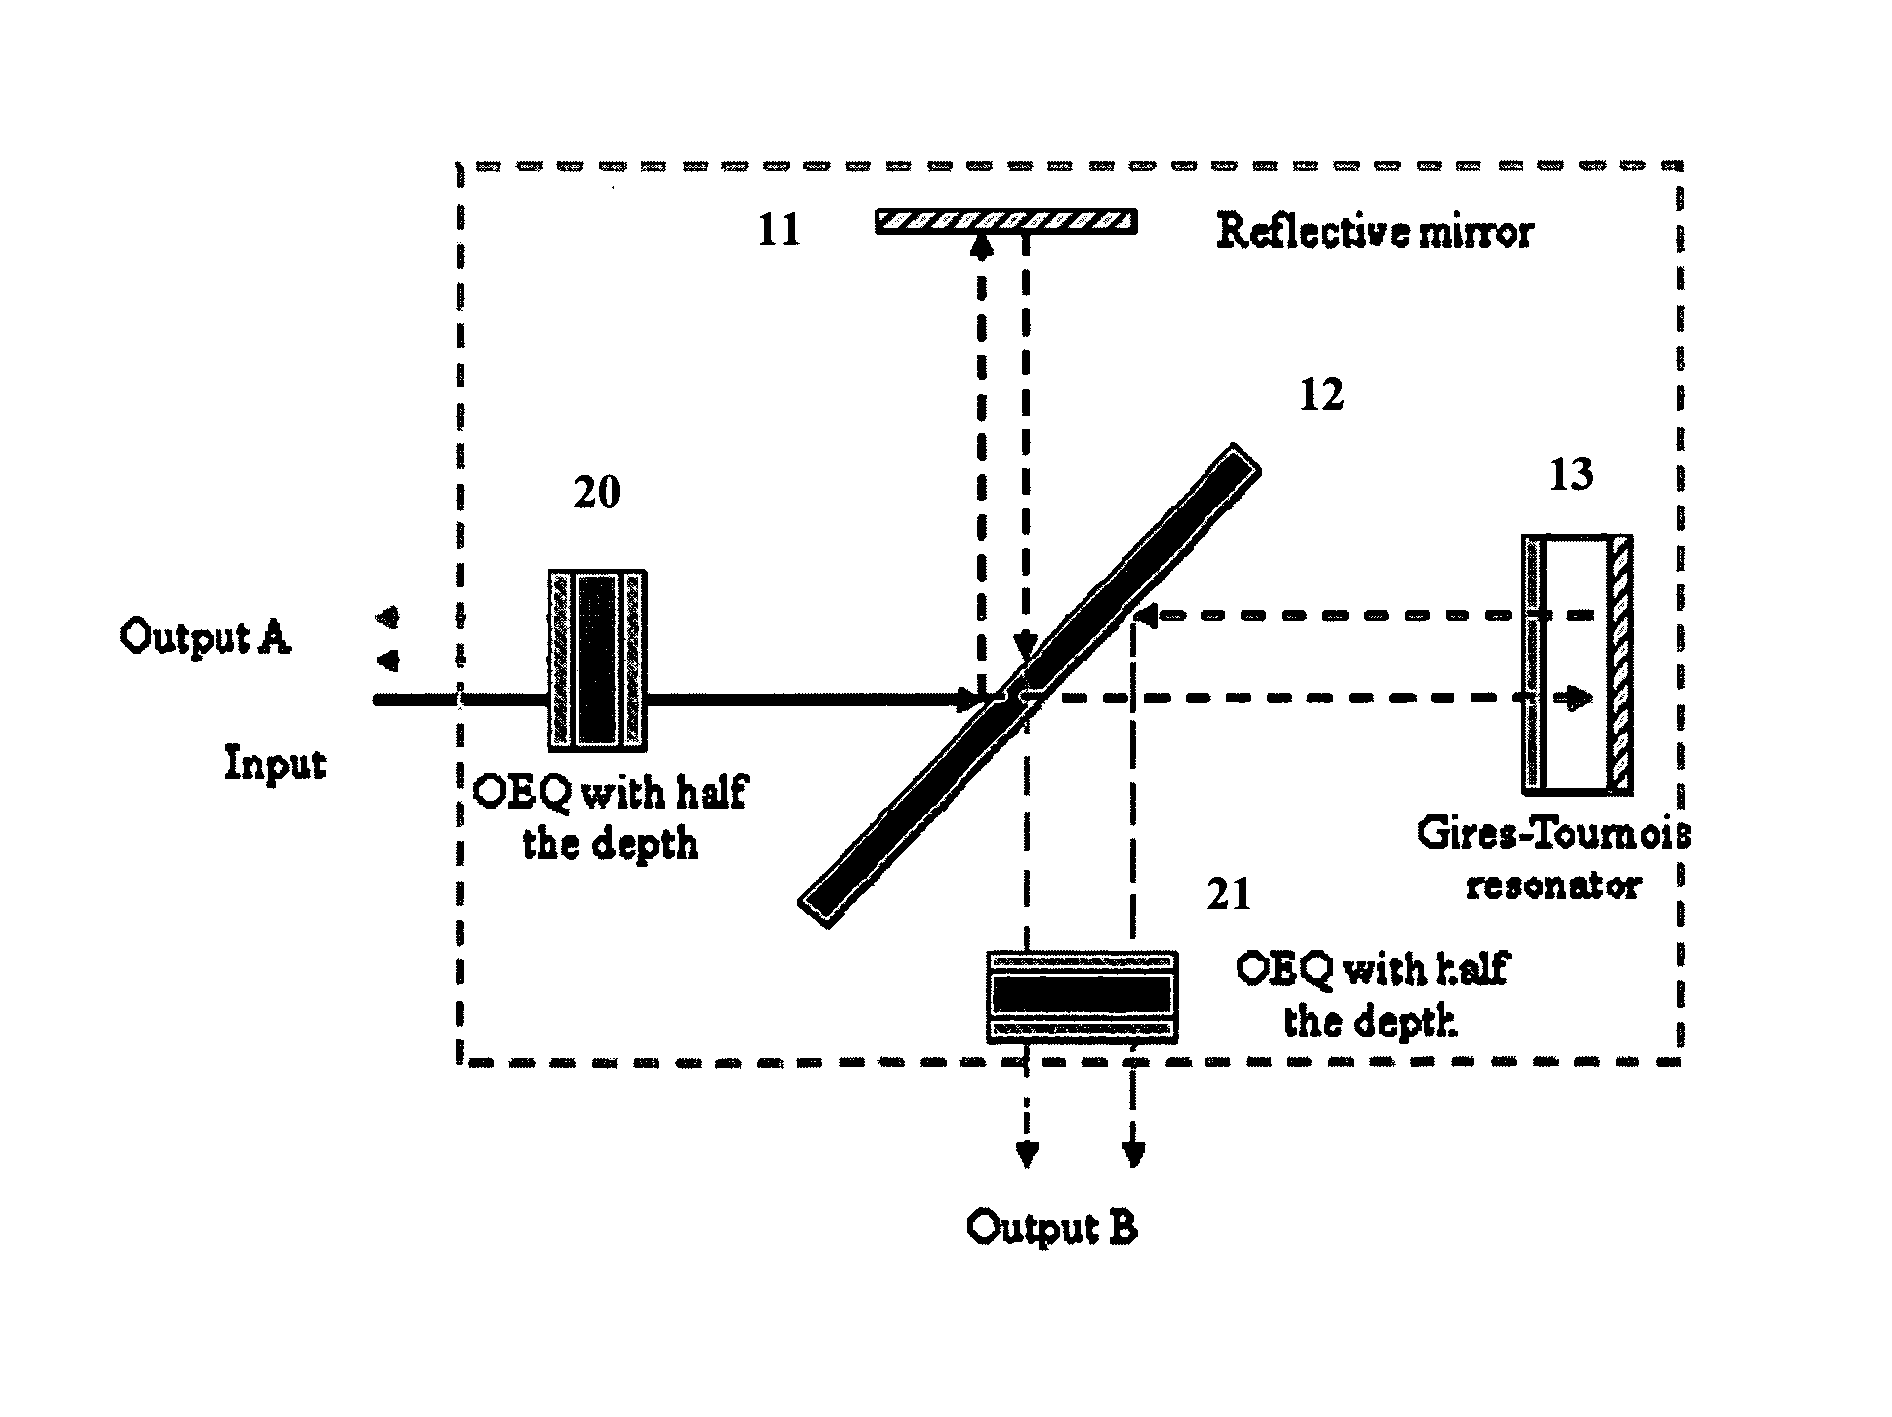 Intra-channel equalizing optical interleaver